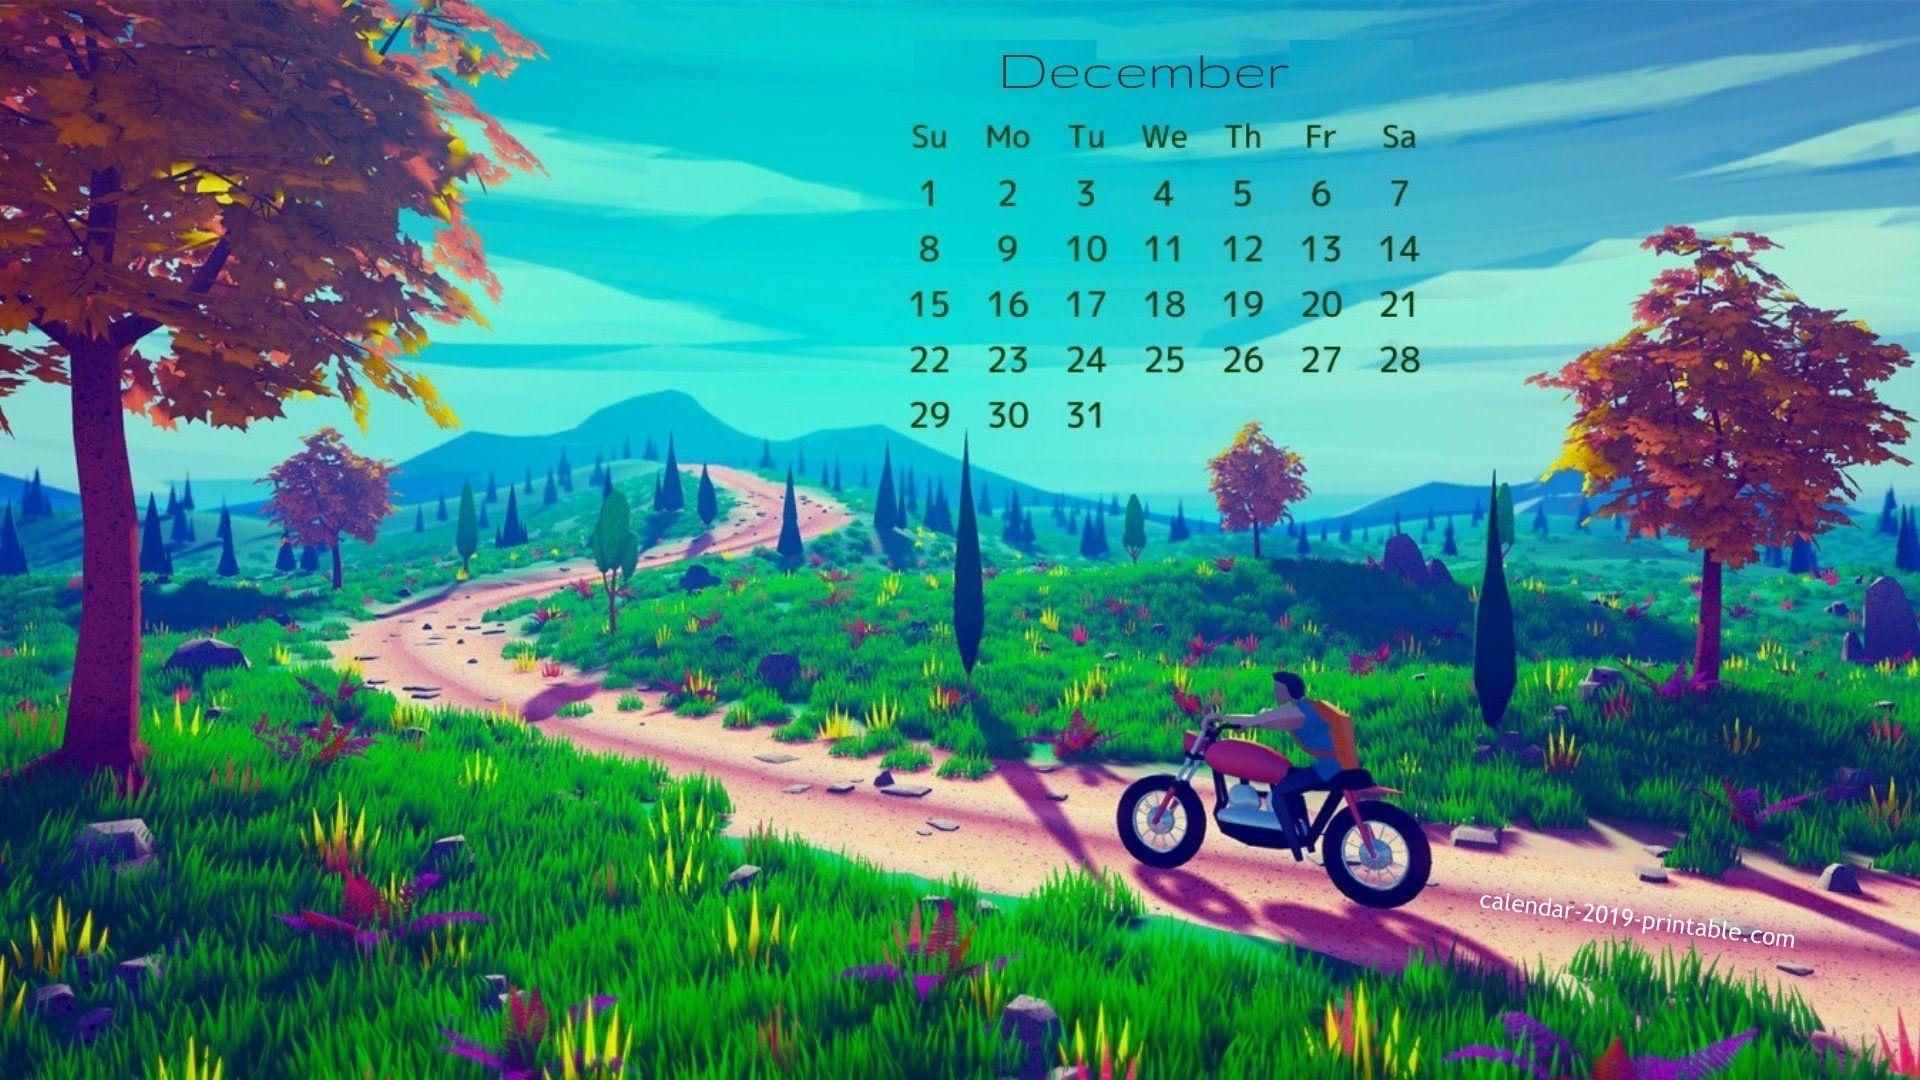  calendar wallpapers Bing images